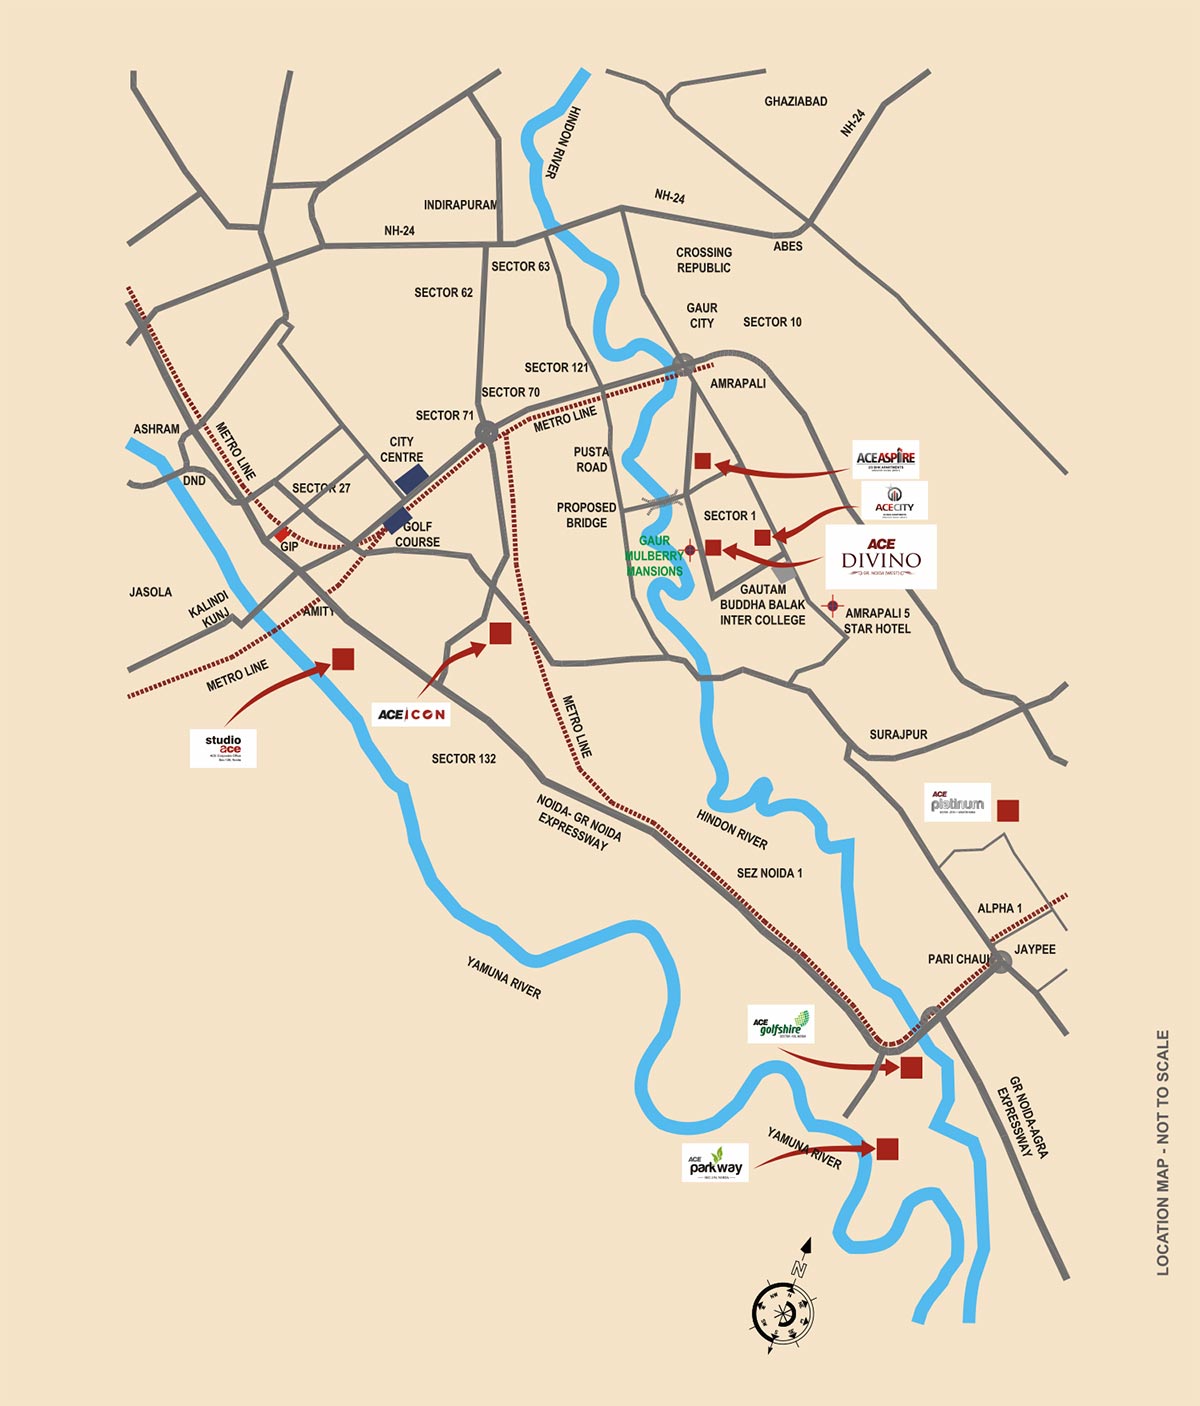 Divino-location-Map